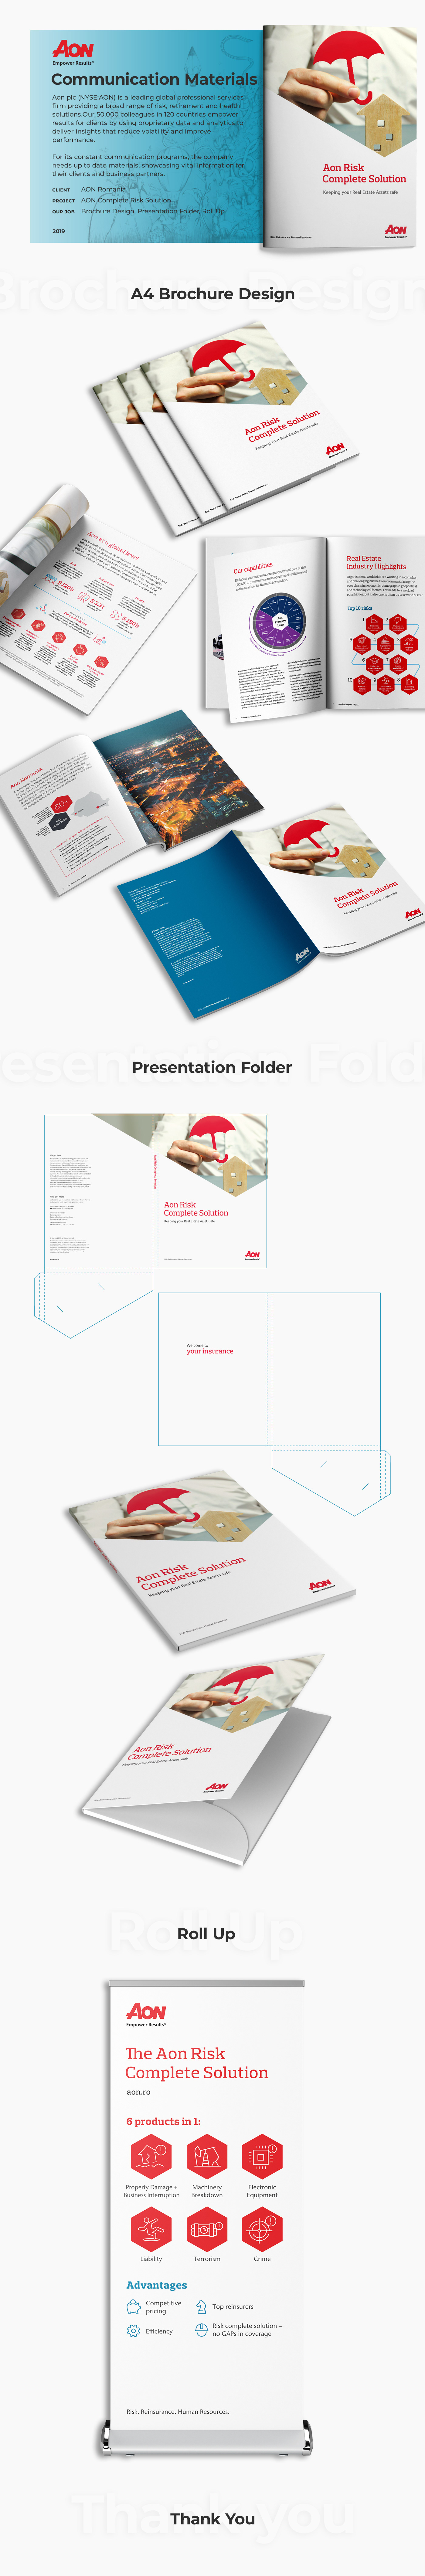 brochure design graphic design  new project materials communication materials roll-up design presentation design